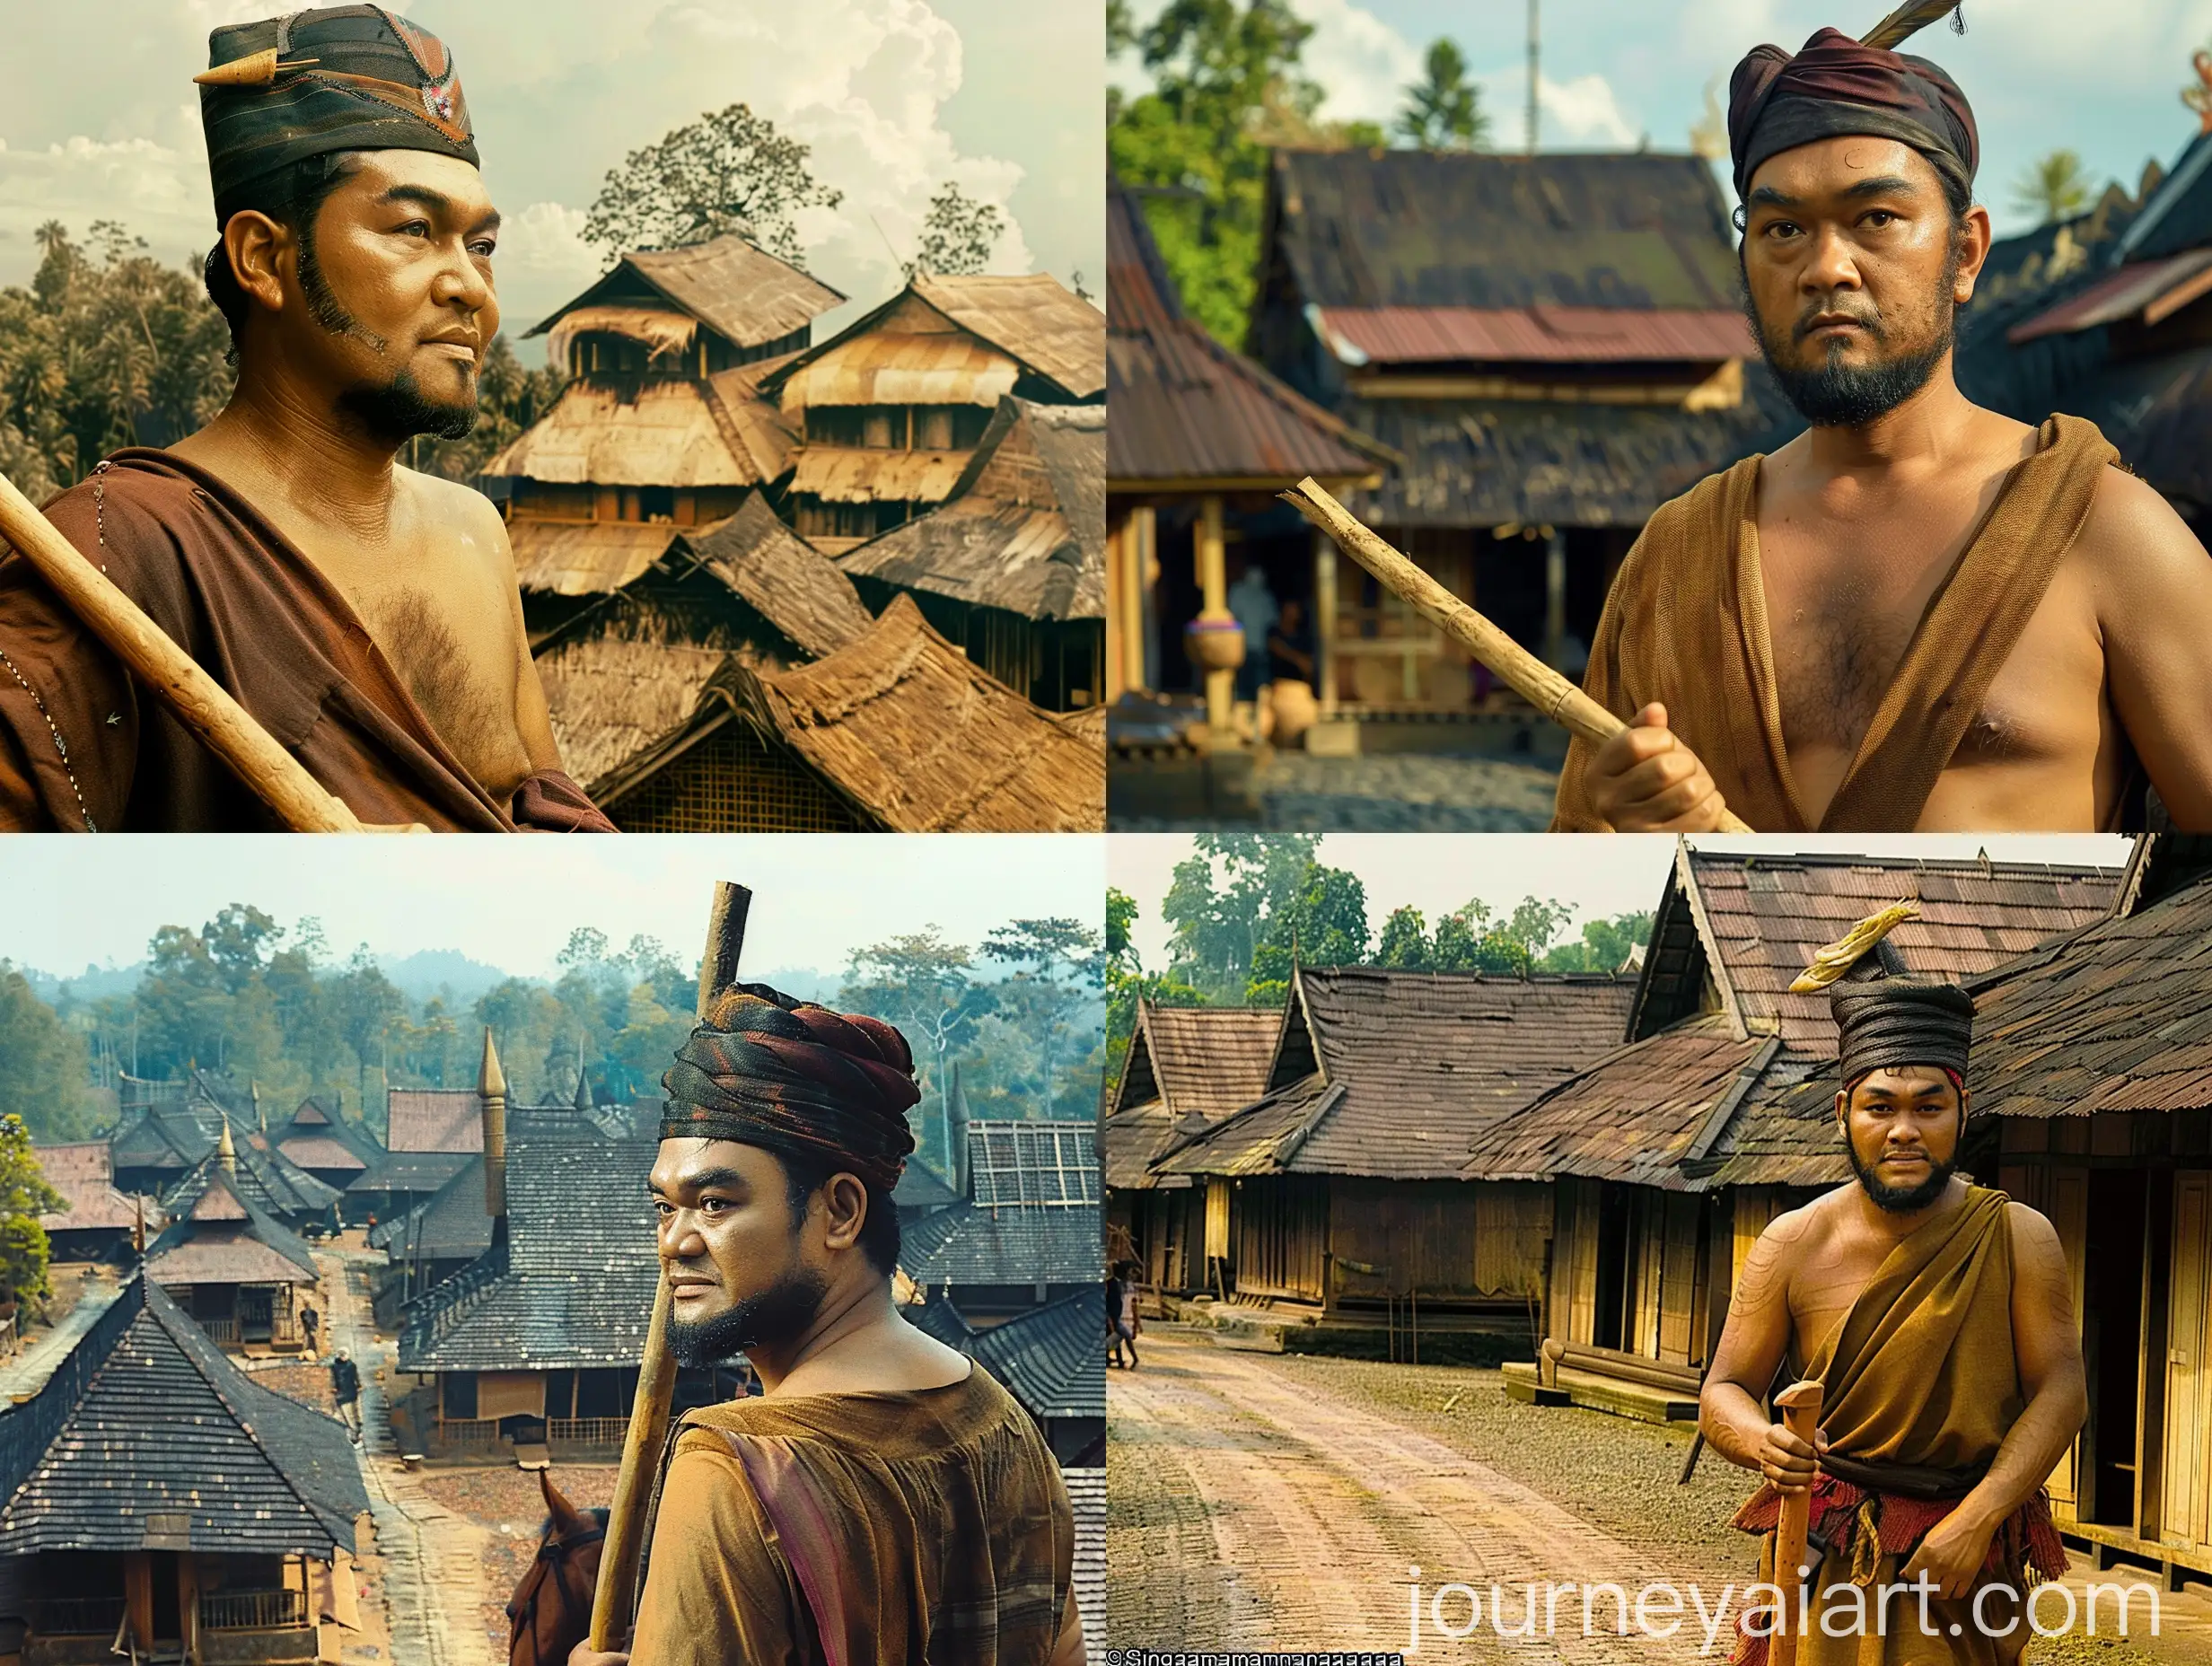 Traditional-Batak-Village-Movie-Scene-Sisingamangaraja-on-Horseback-with-Wooden-Stick